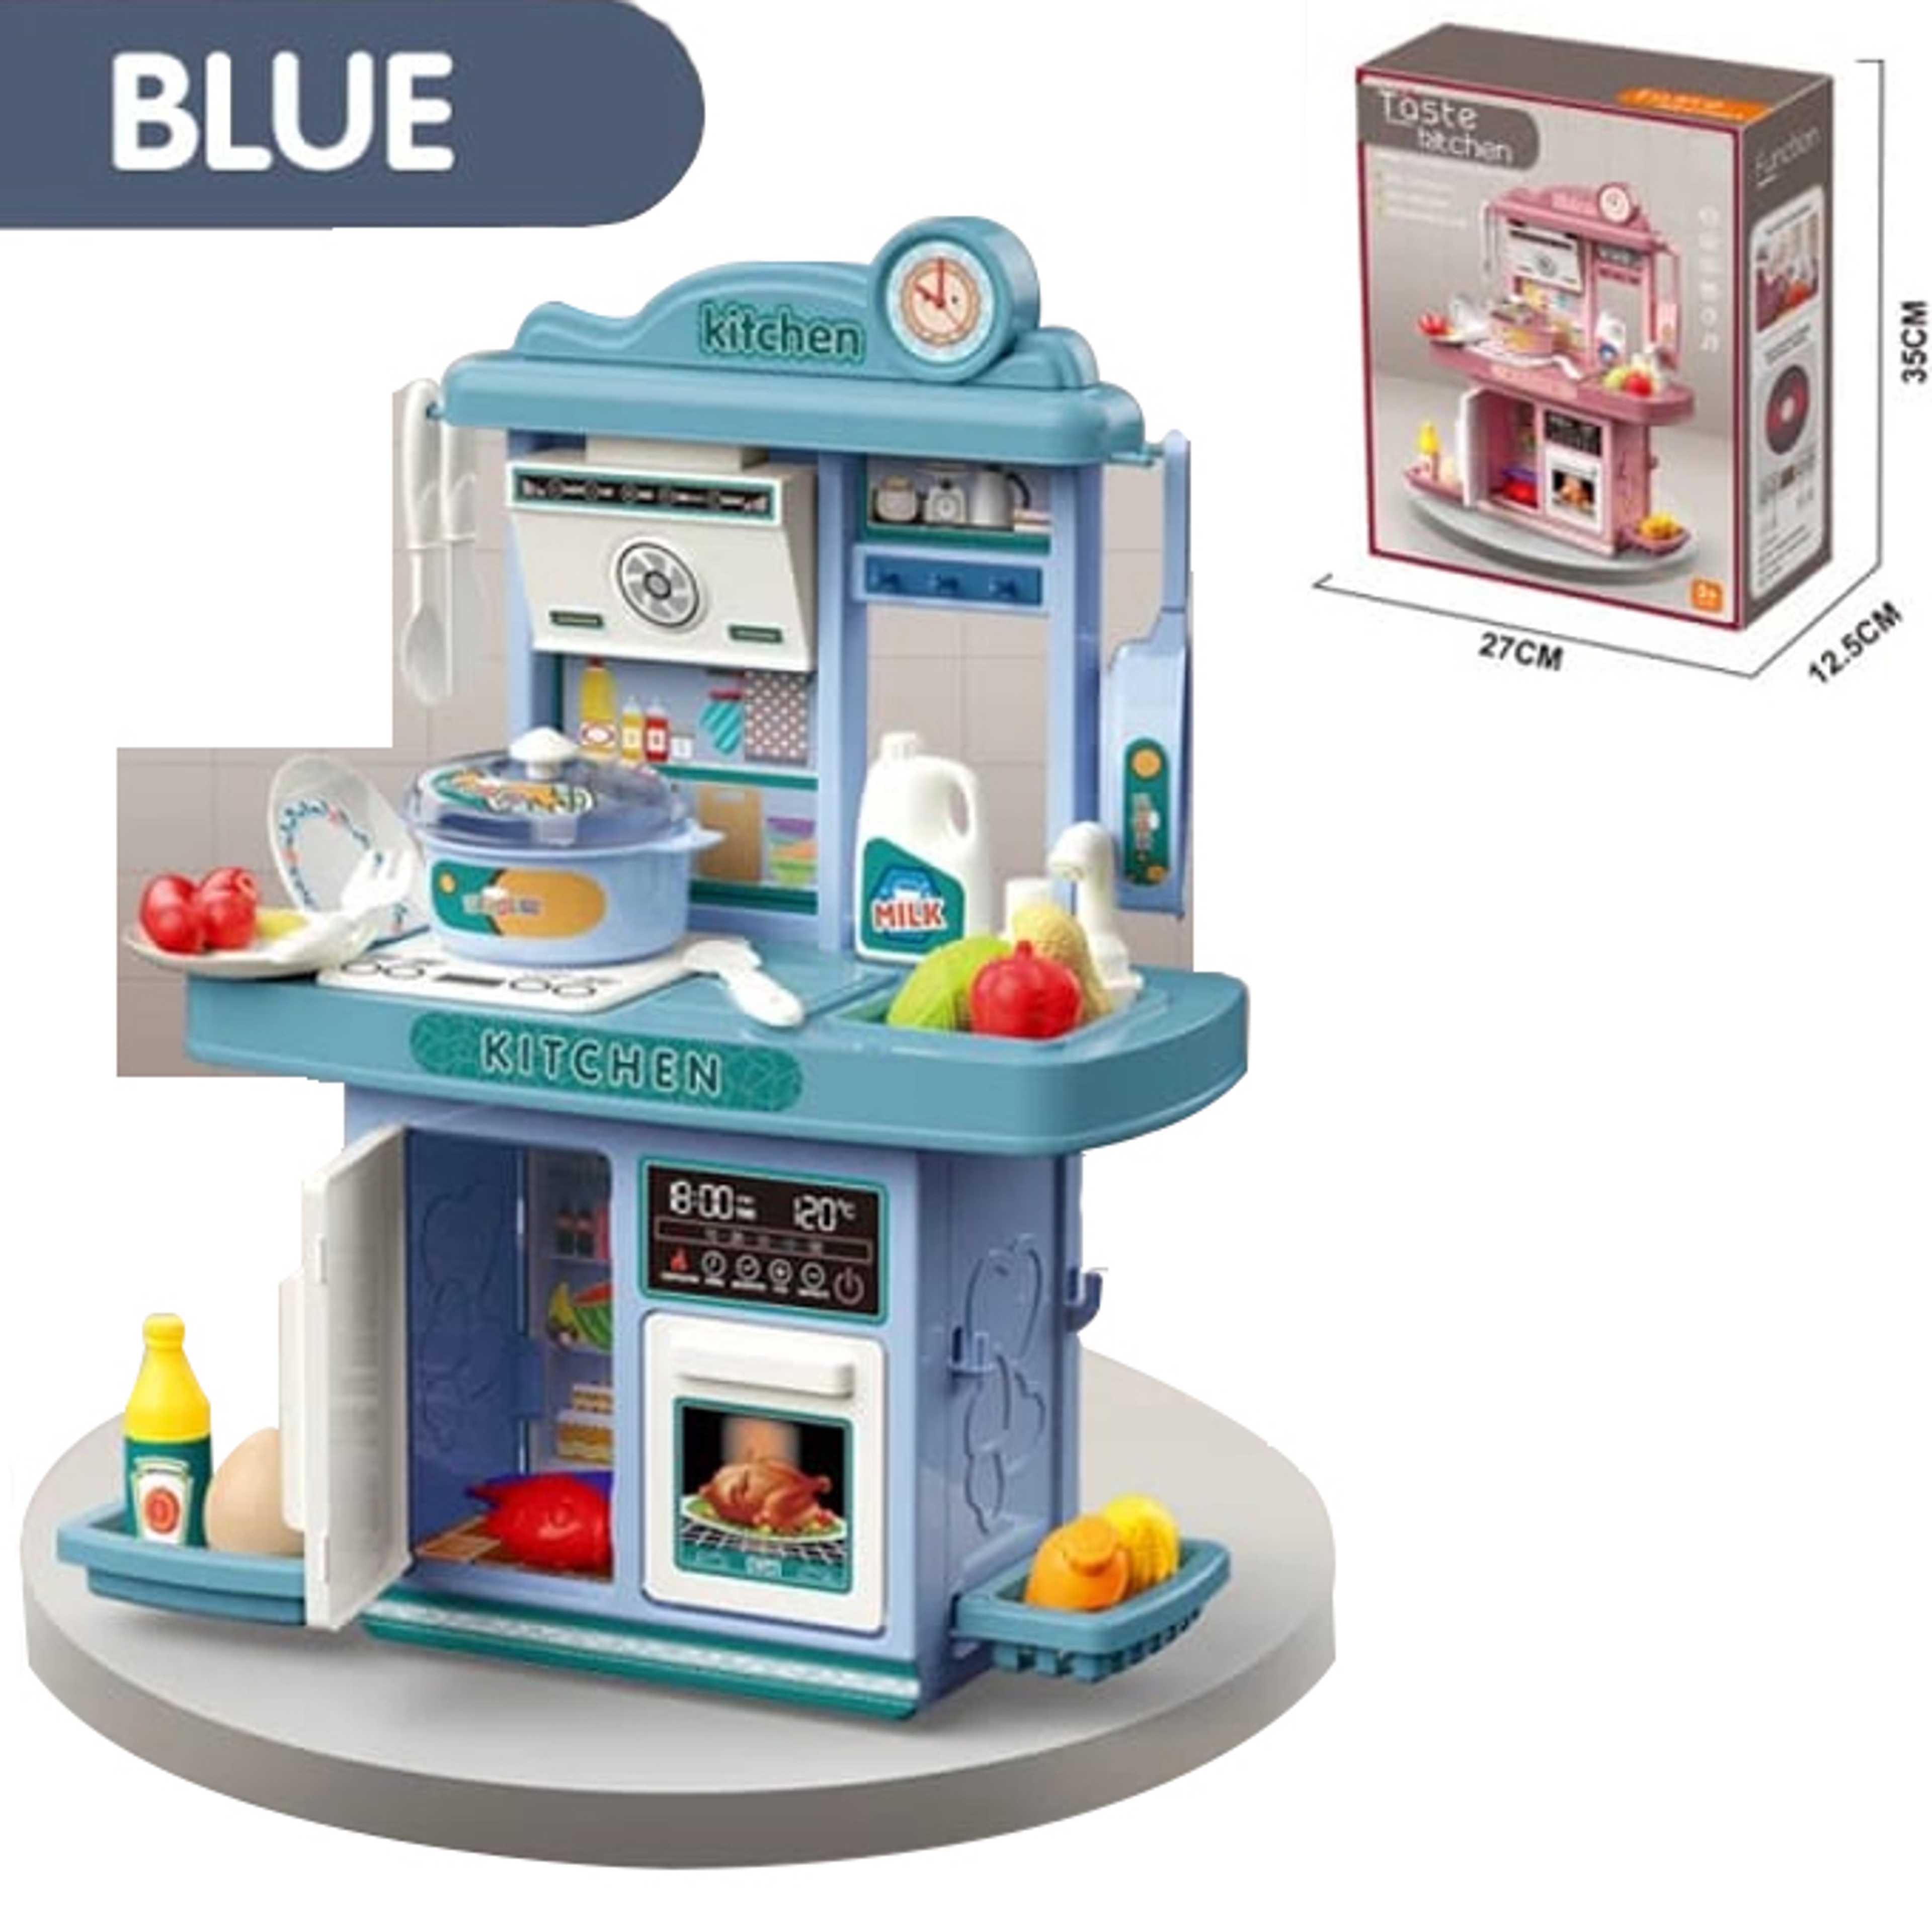 Complete Taste Kitchen Toy for Kids